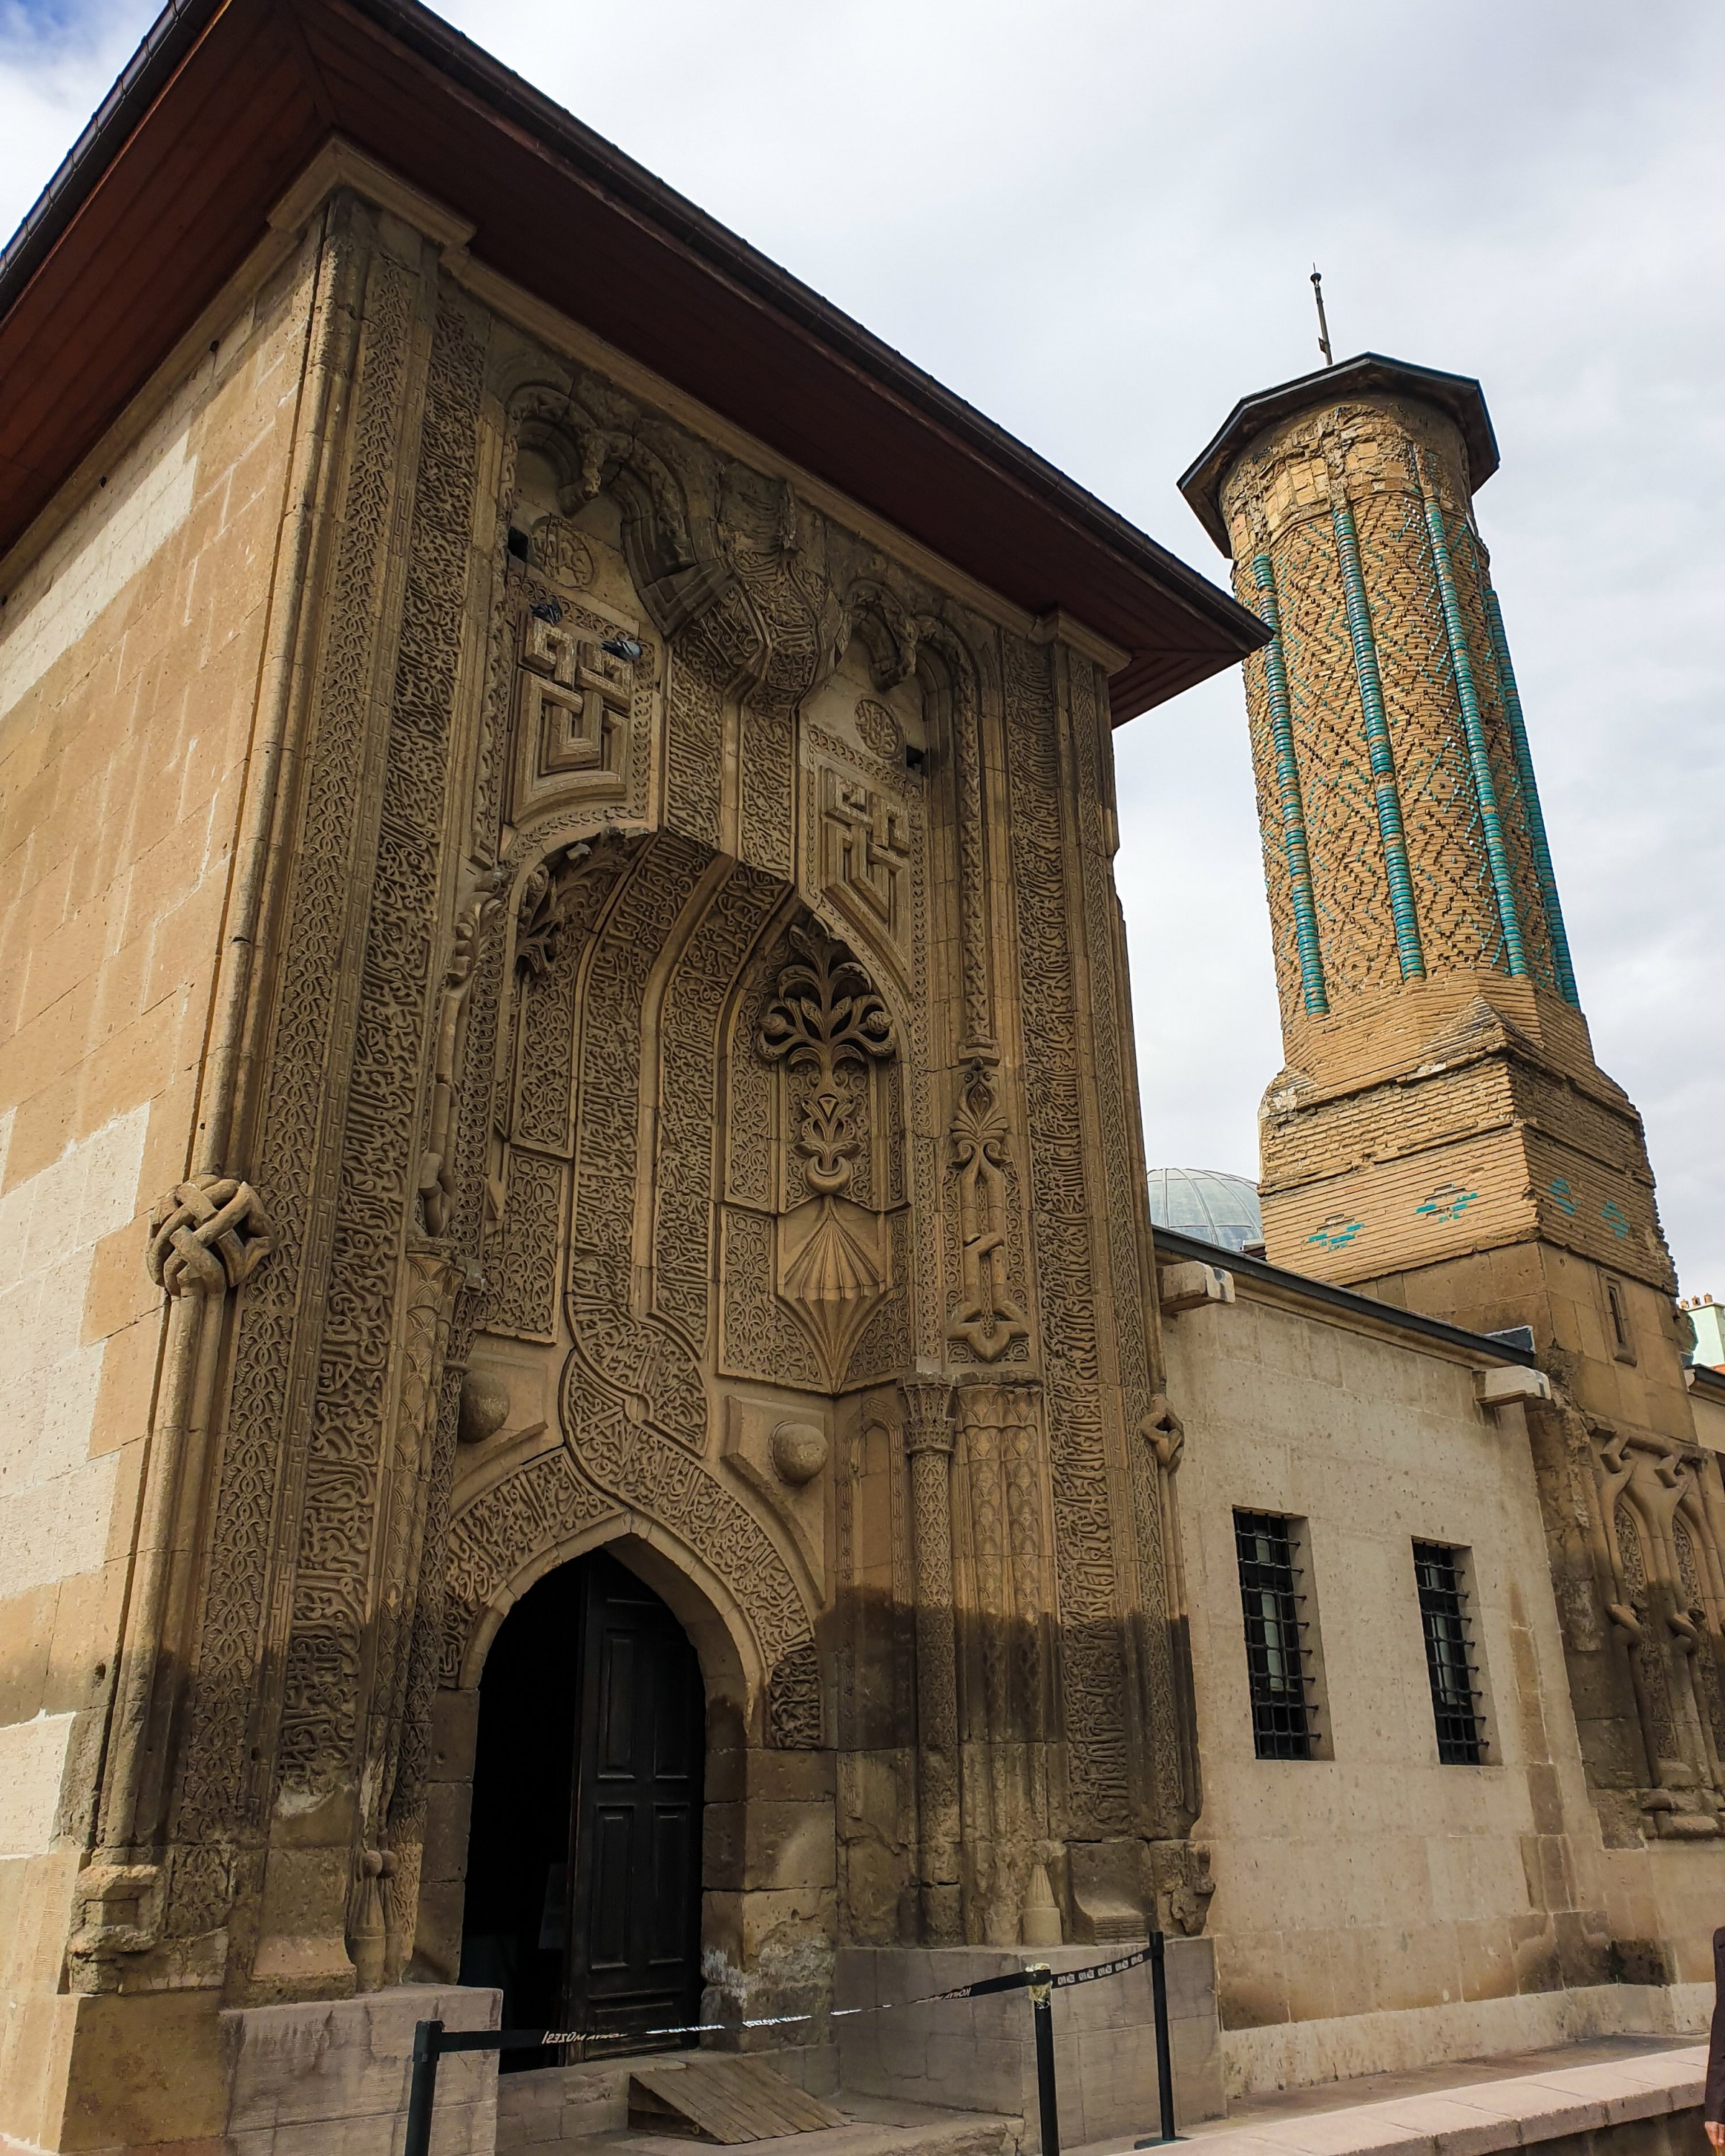 The gate and the minaret of the Ince Minare Madrassa. (Photo by Argun Konuk)